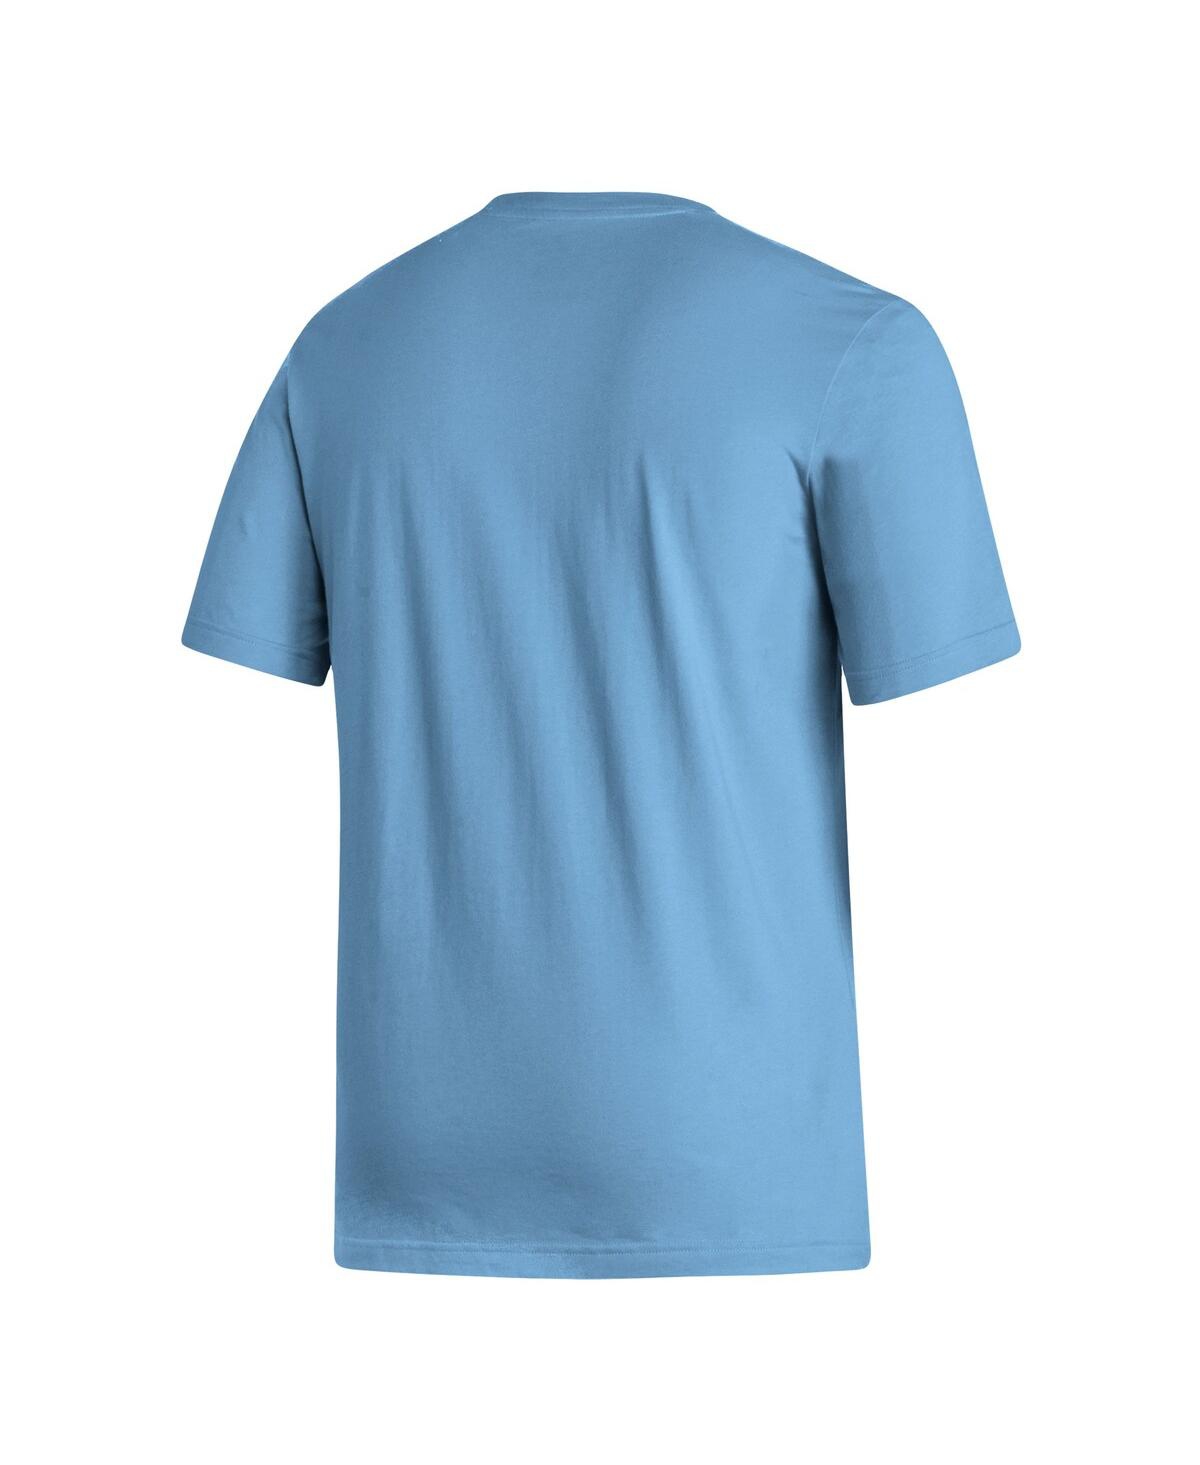 Shop Adidas Originals Men's Adidas Light Blue Argentina National Team Crest T-shirt